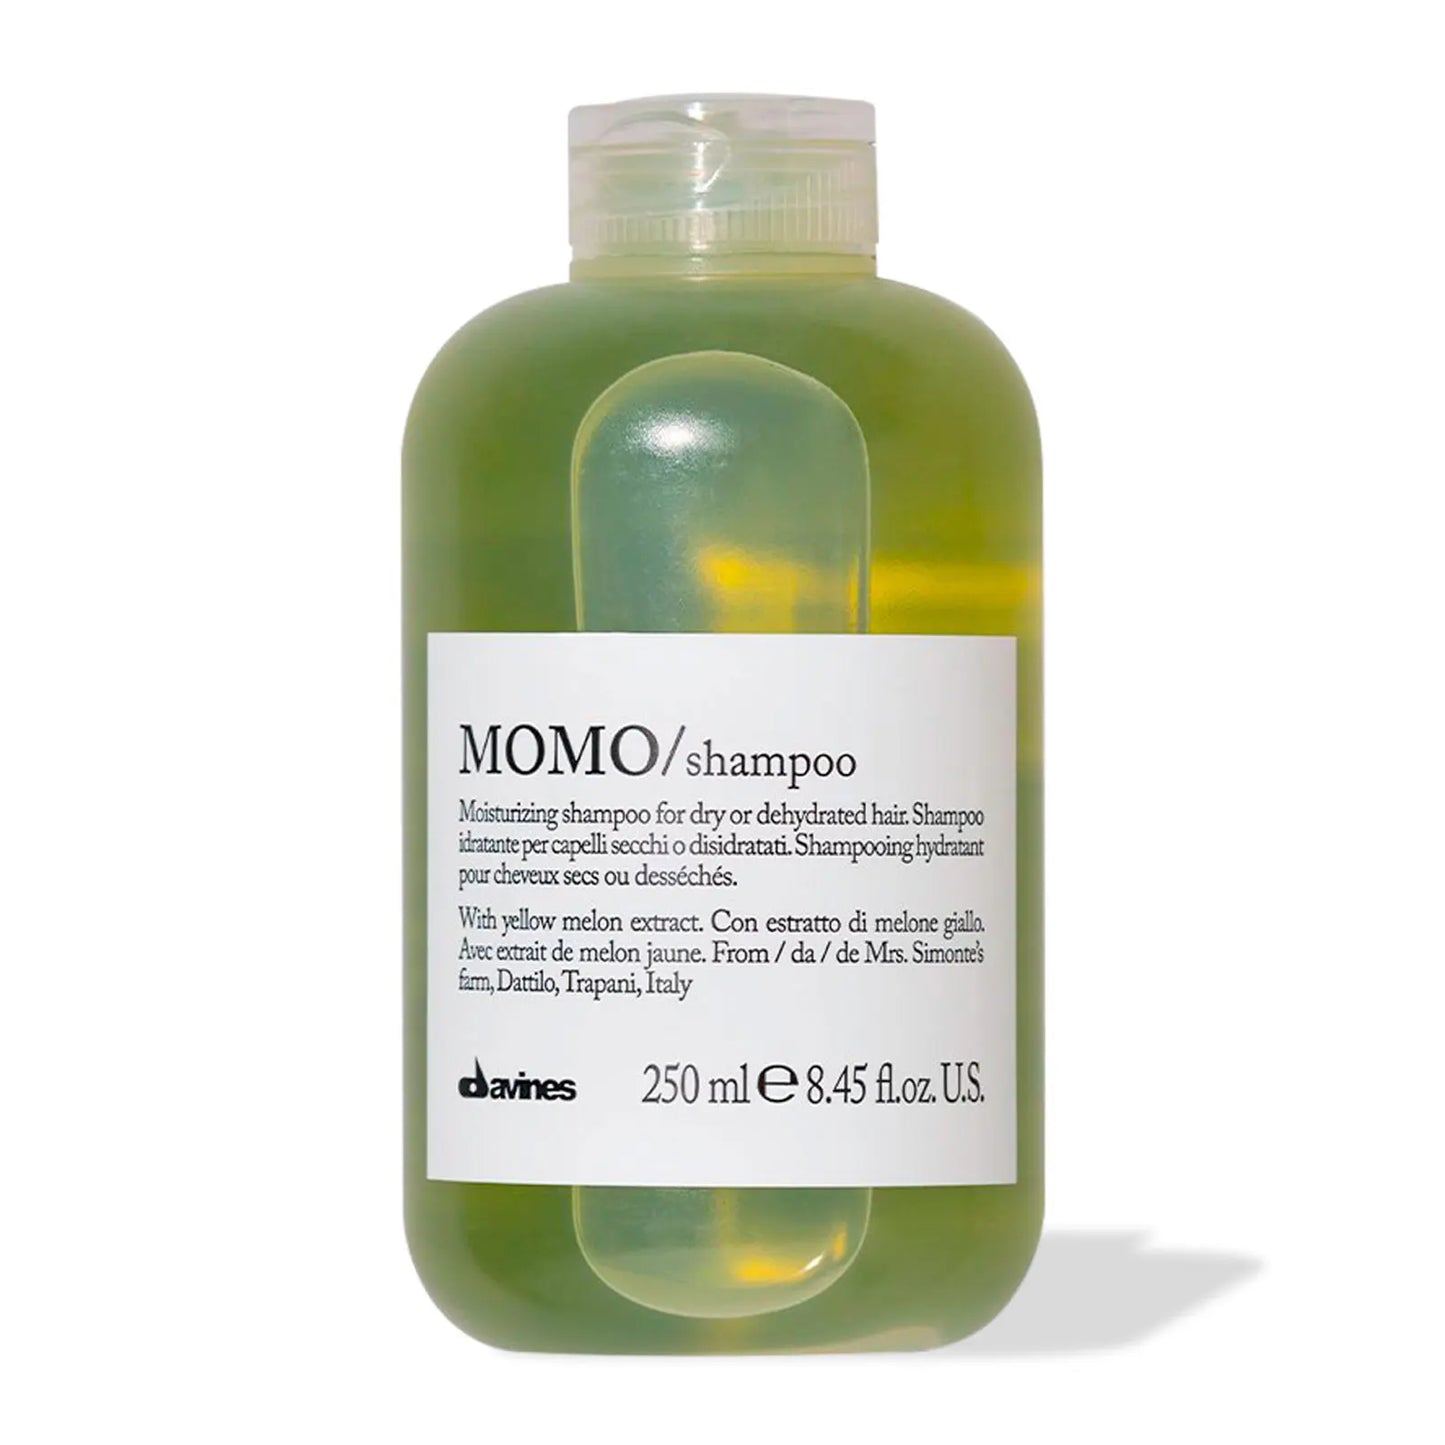 MOMO/ Shampoo (8.45 Oz)